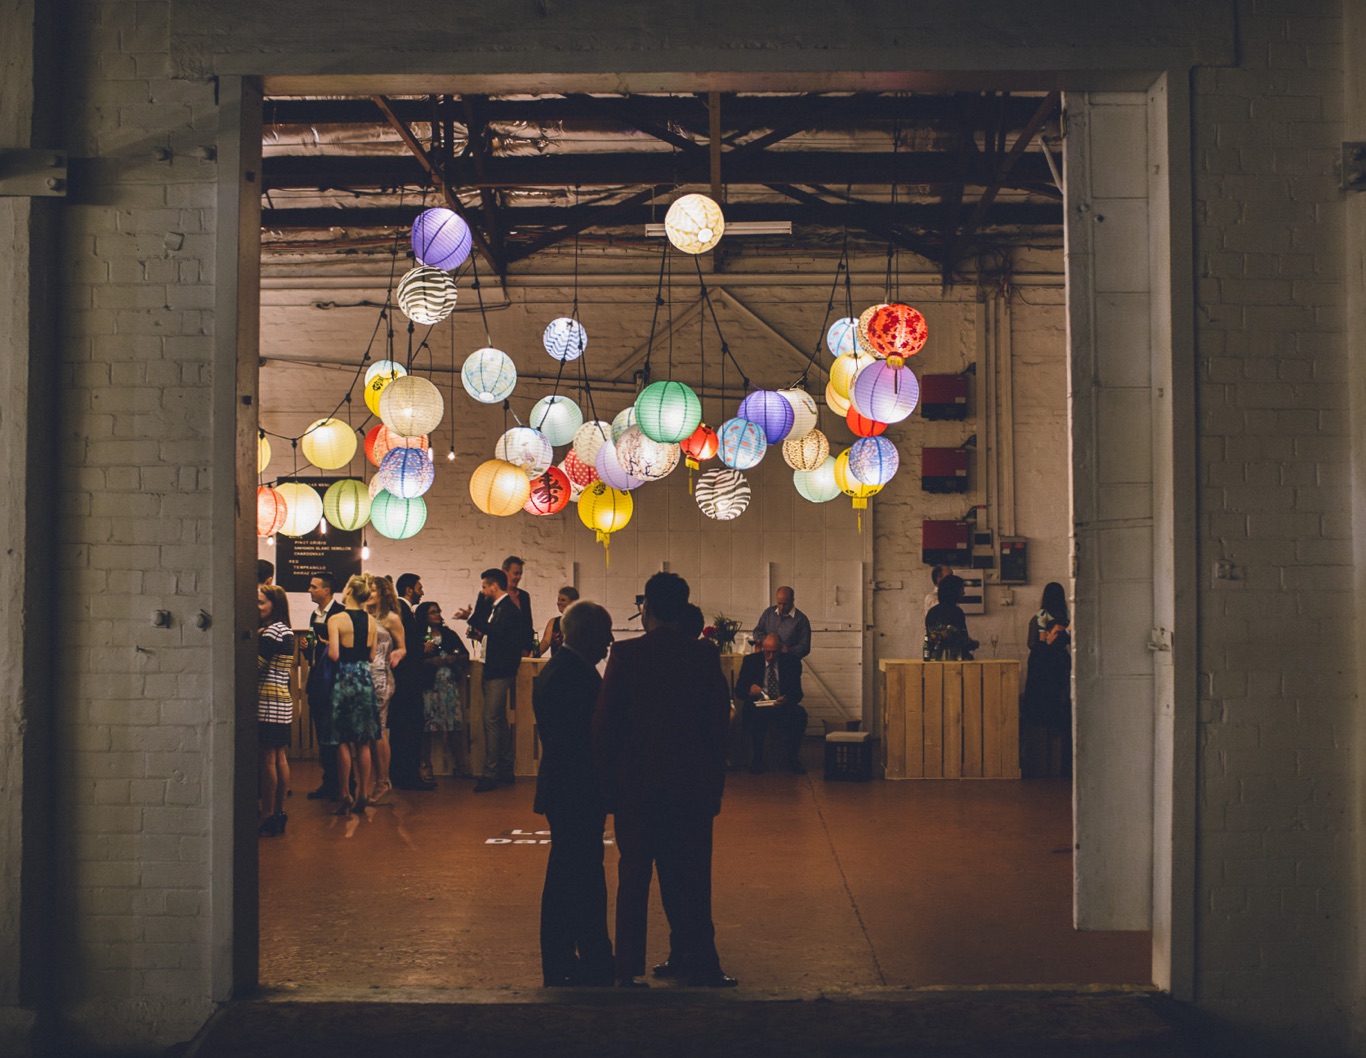 Weddings guests under light installation inside a barn.